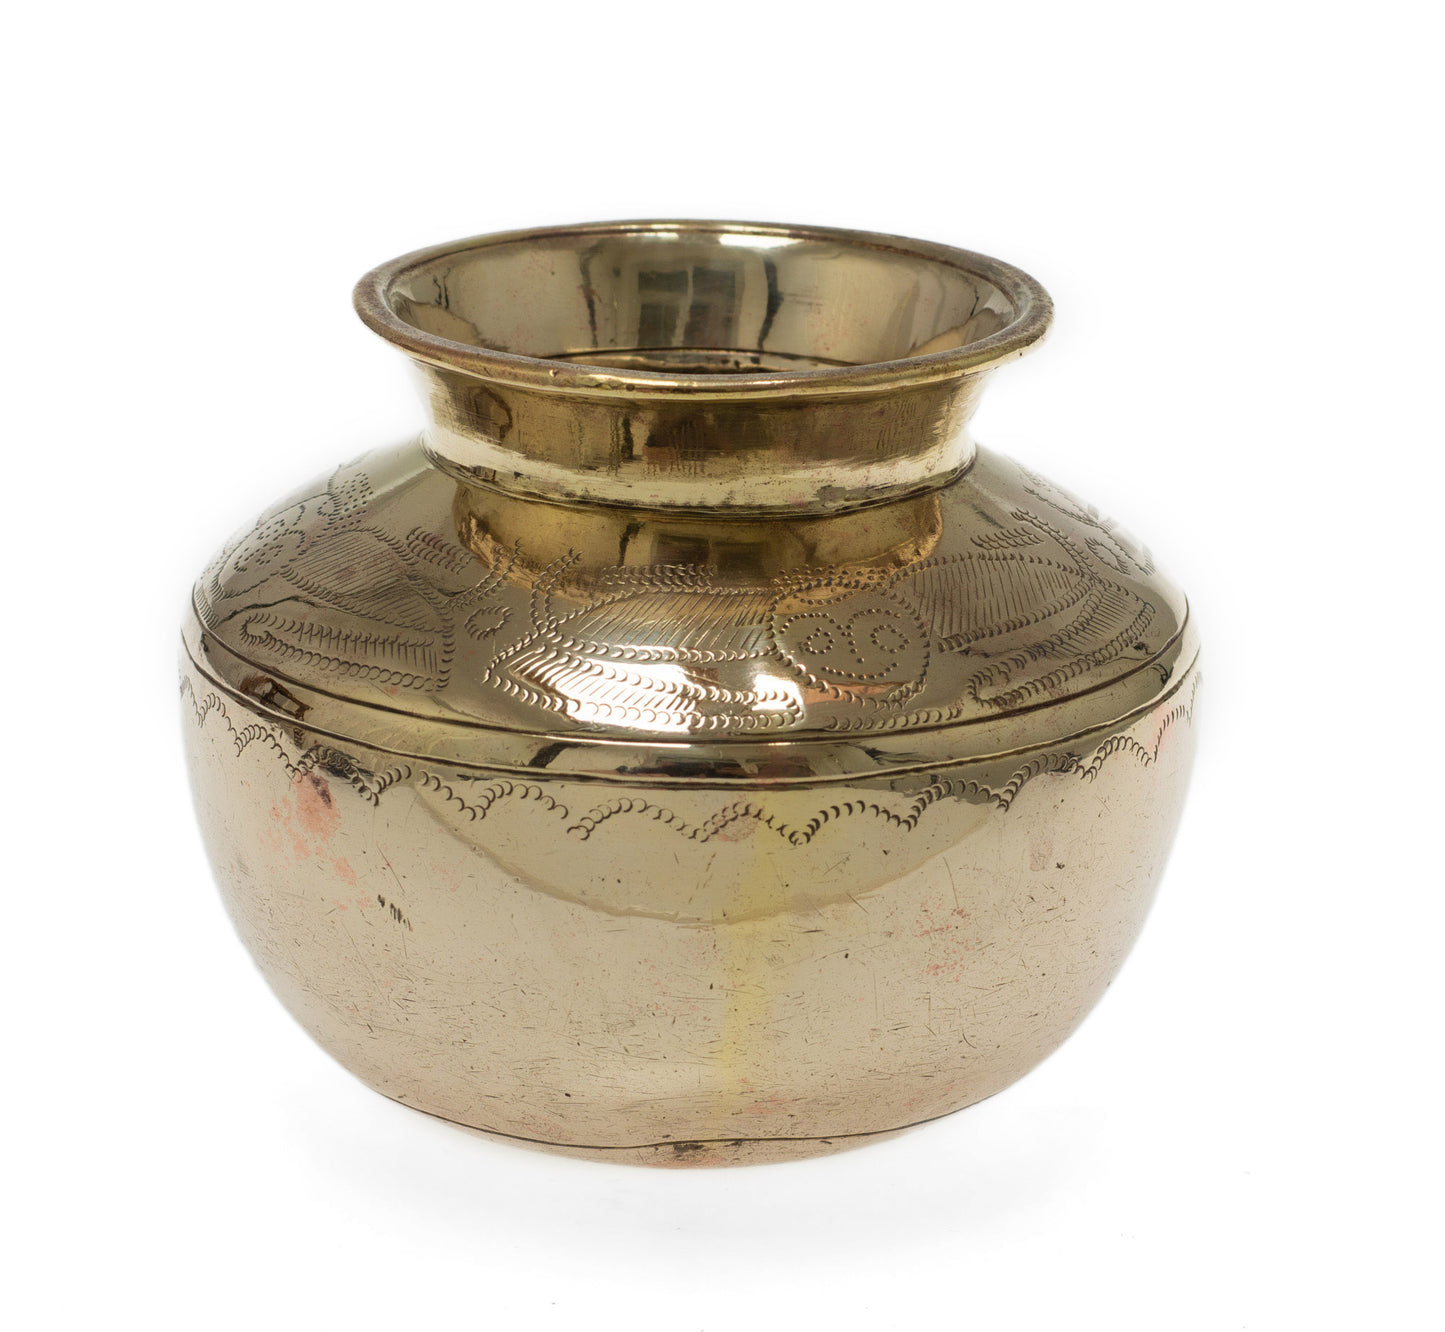 Antique Indian Hindu Heavy Brass Lota Vessel / Vase with Ganesha & Owls (Code 2697)